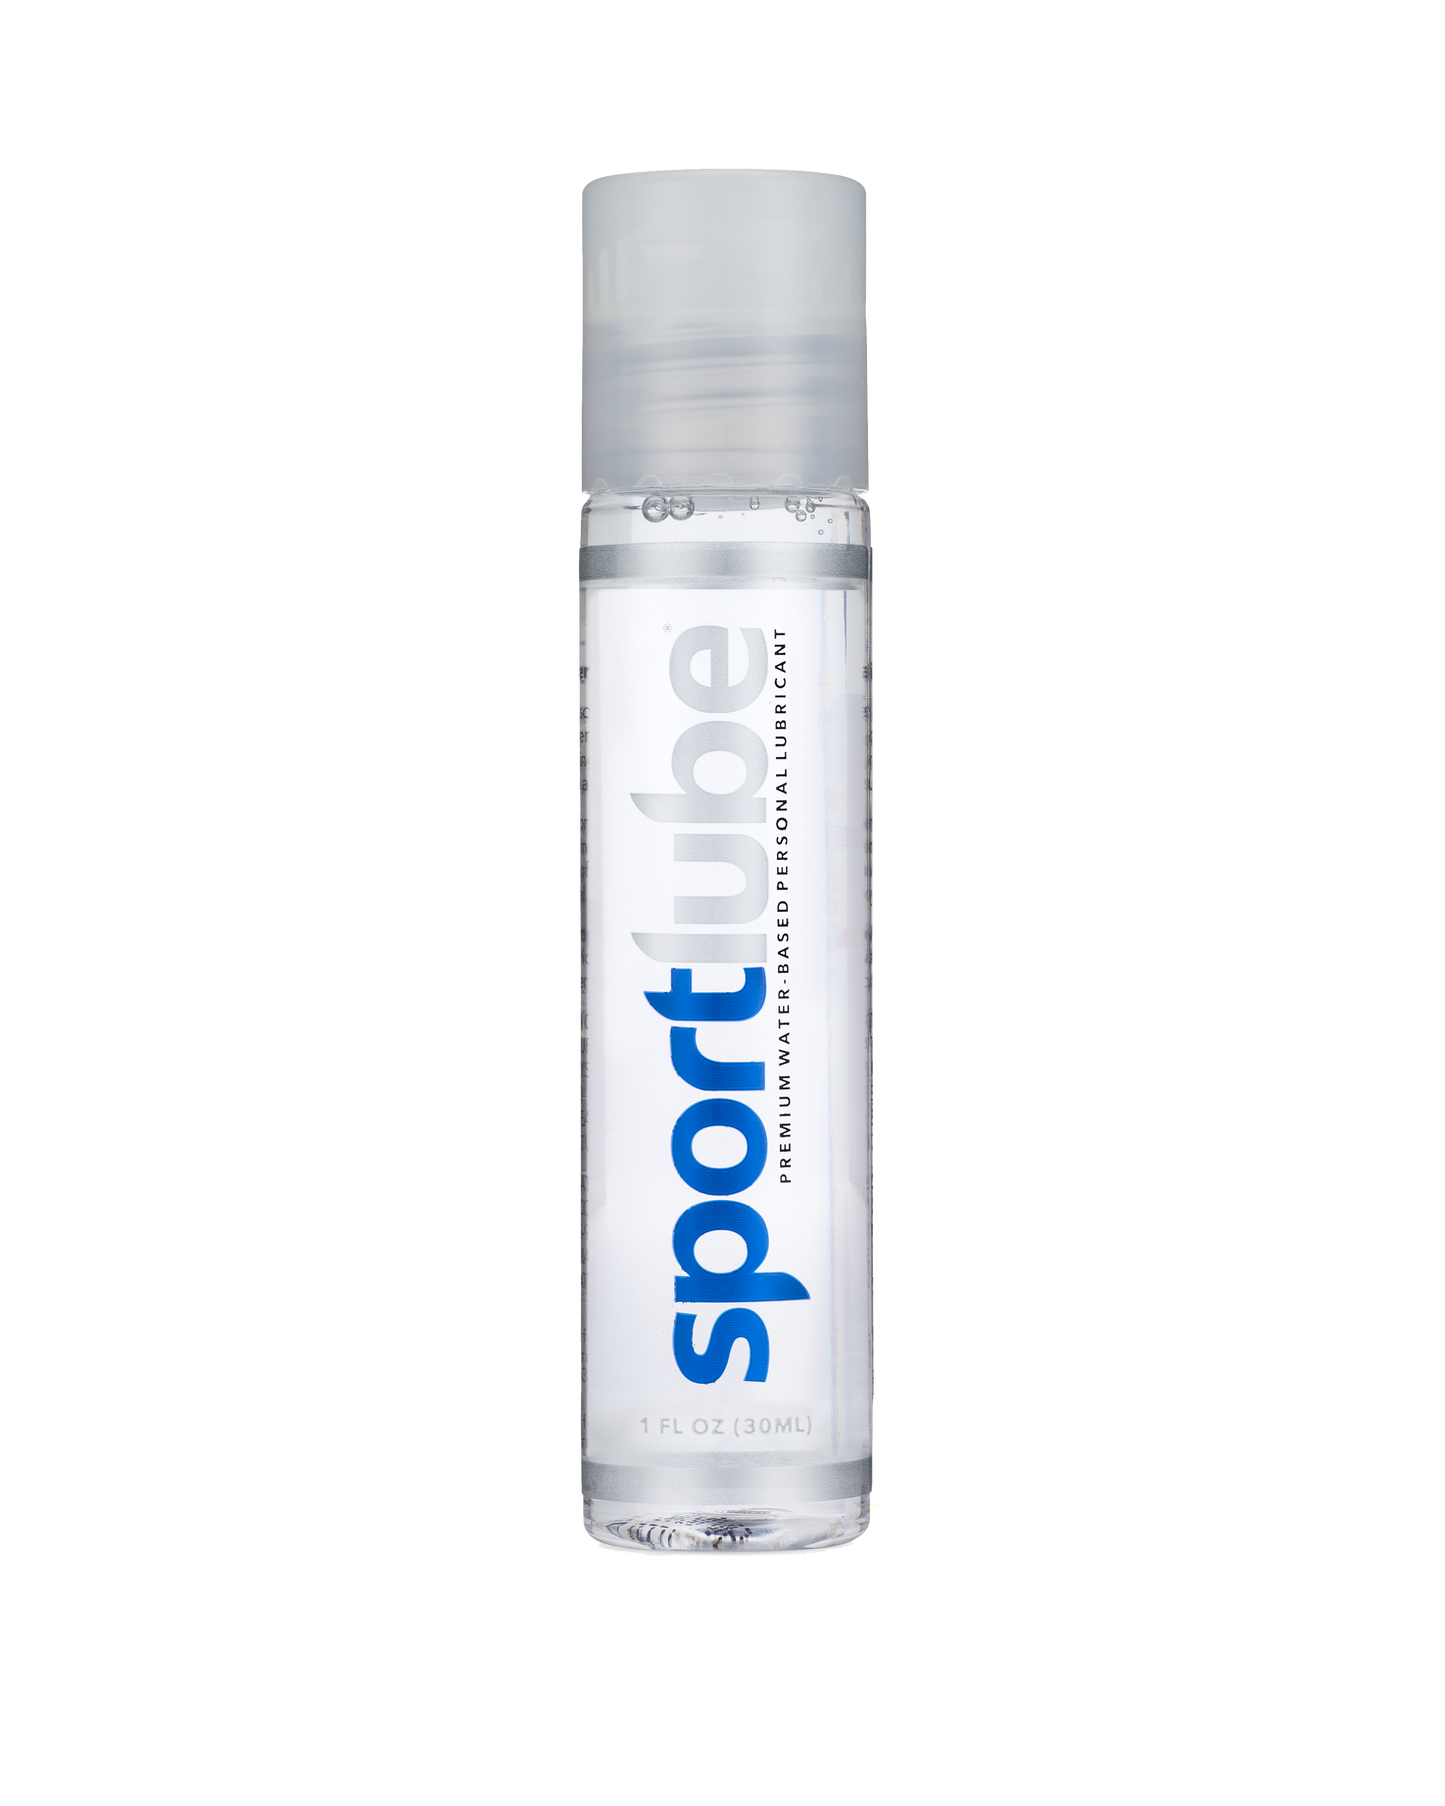 SportLube Premium Water-Based Lubricant 1 oz (30 ml)